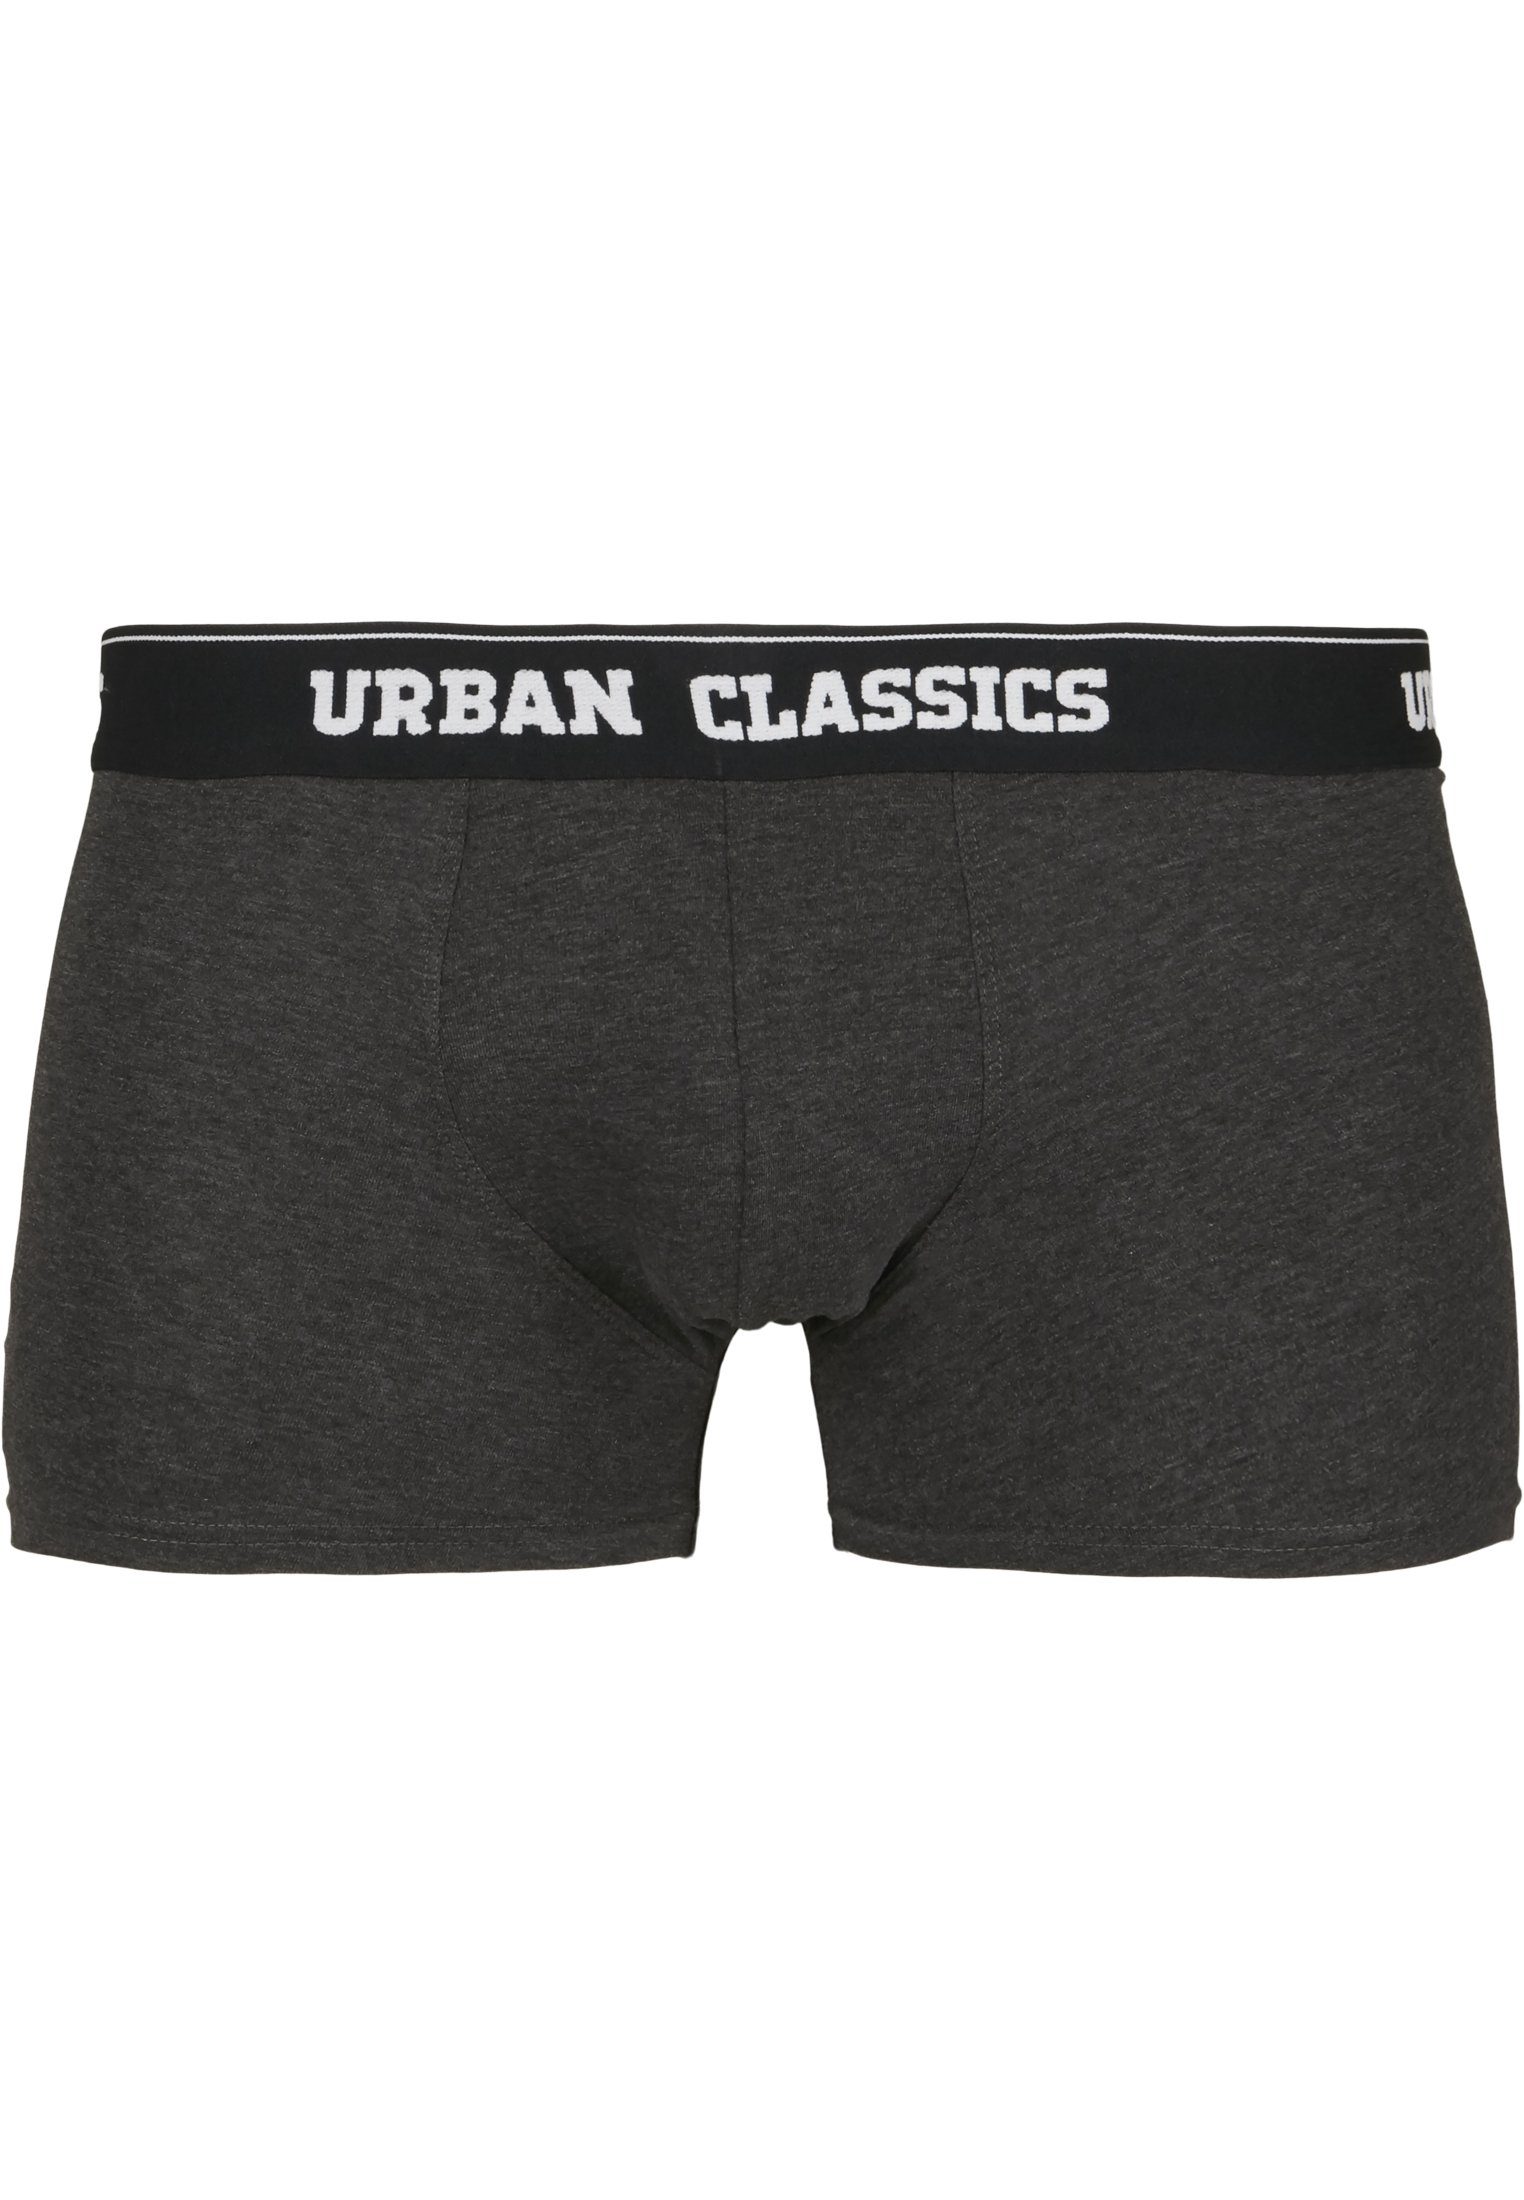 URBAN CLASSICS Boxershorts Herren Men Boxer Shorts Double Pack (1-St) black/charcoal